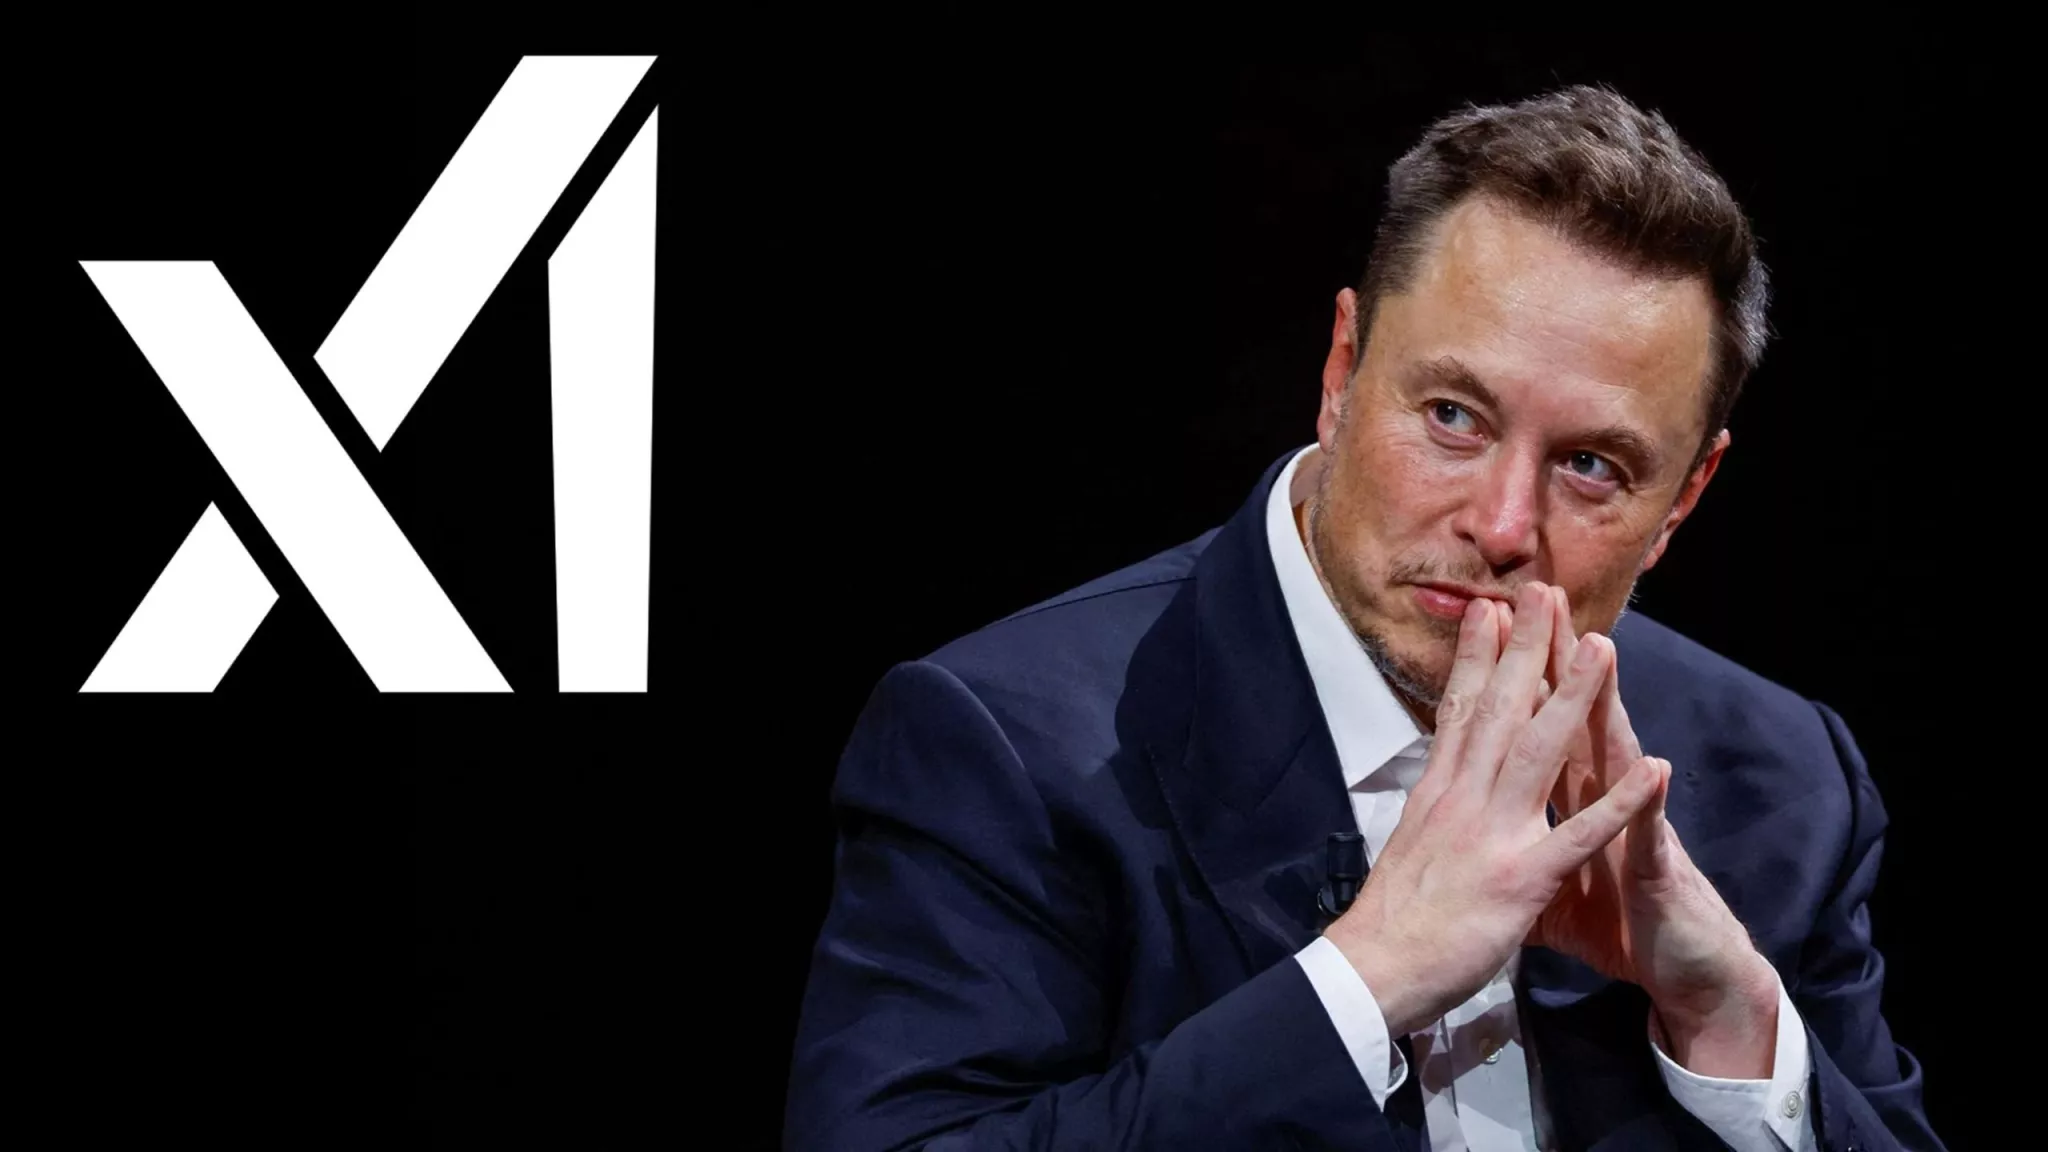 Oficialmente, Elon Musk inaugura xAI con el fin de desarrollar Inteligencia Artificial segura